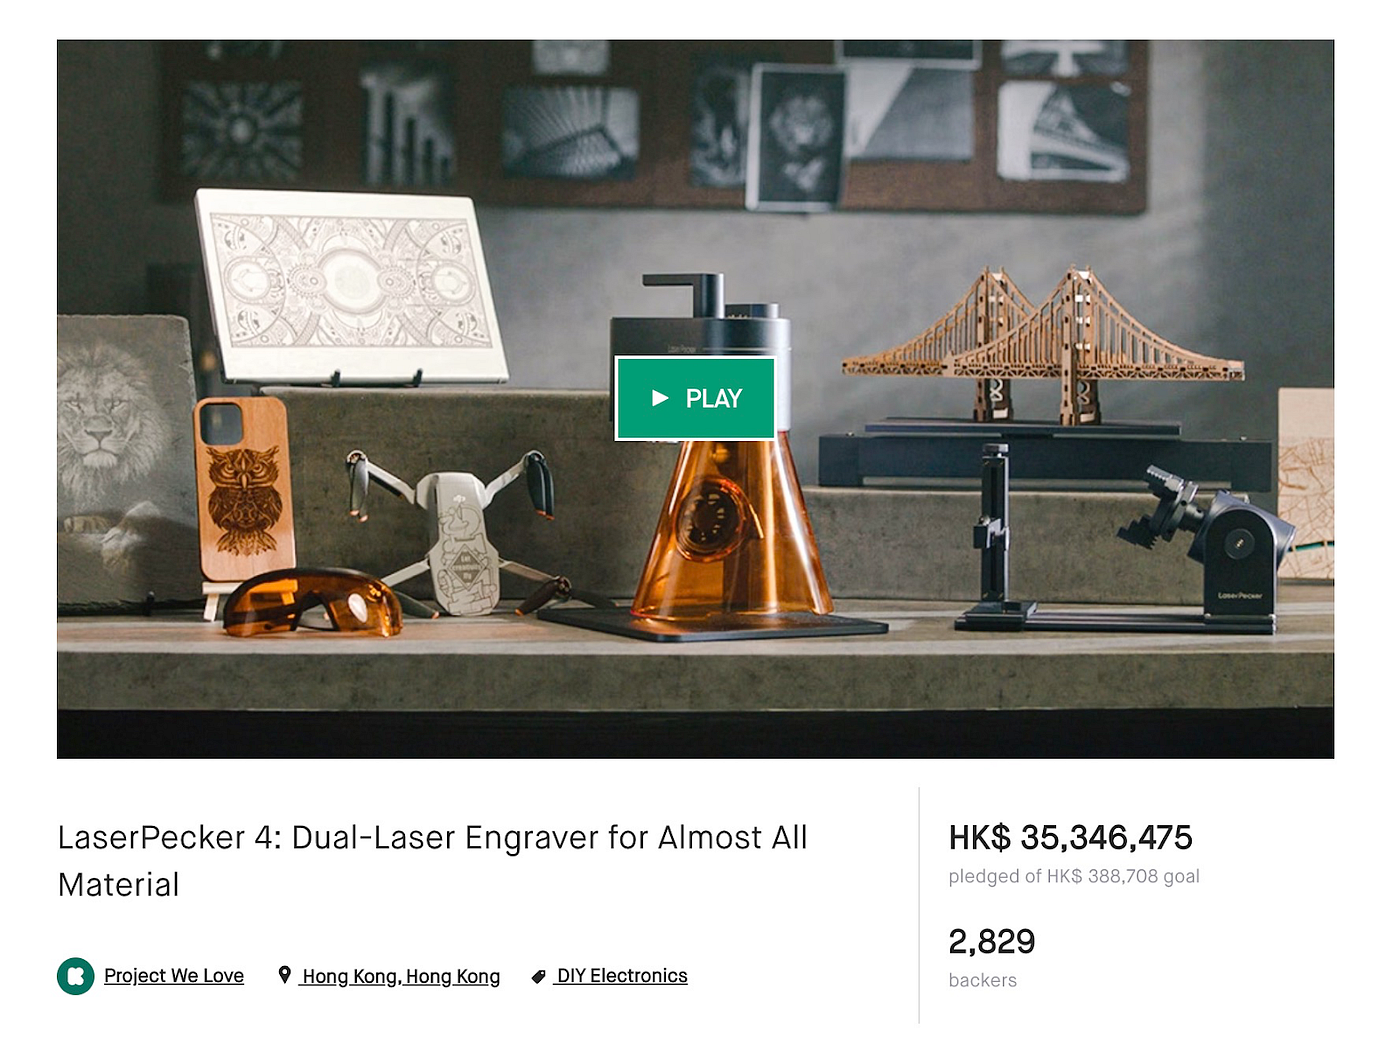 How LaserPecker 4 raised $4.5 million on Kickstarter?, by PledgeBox